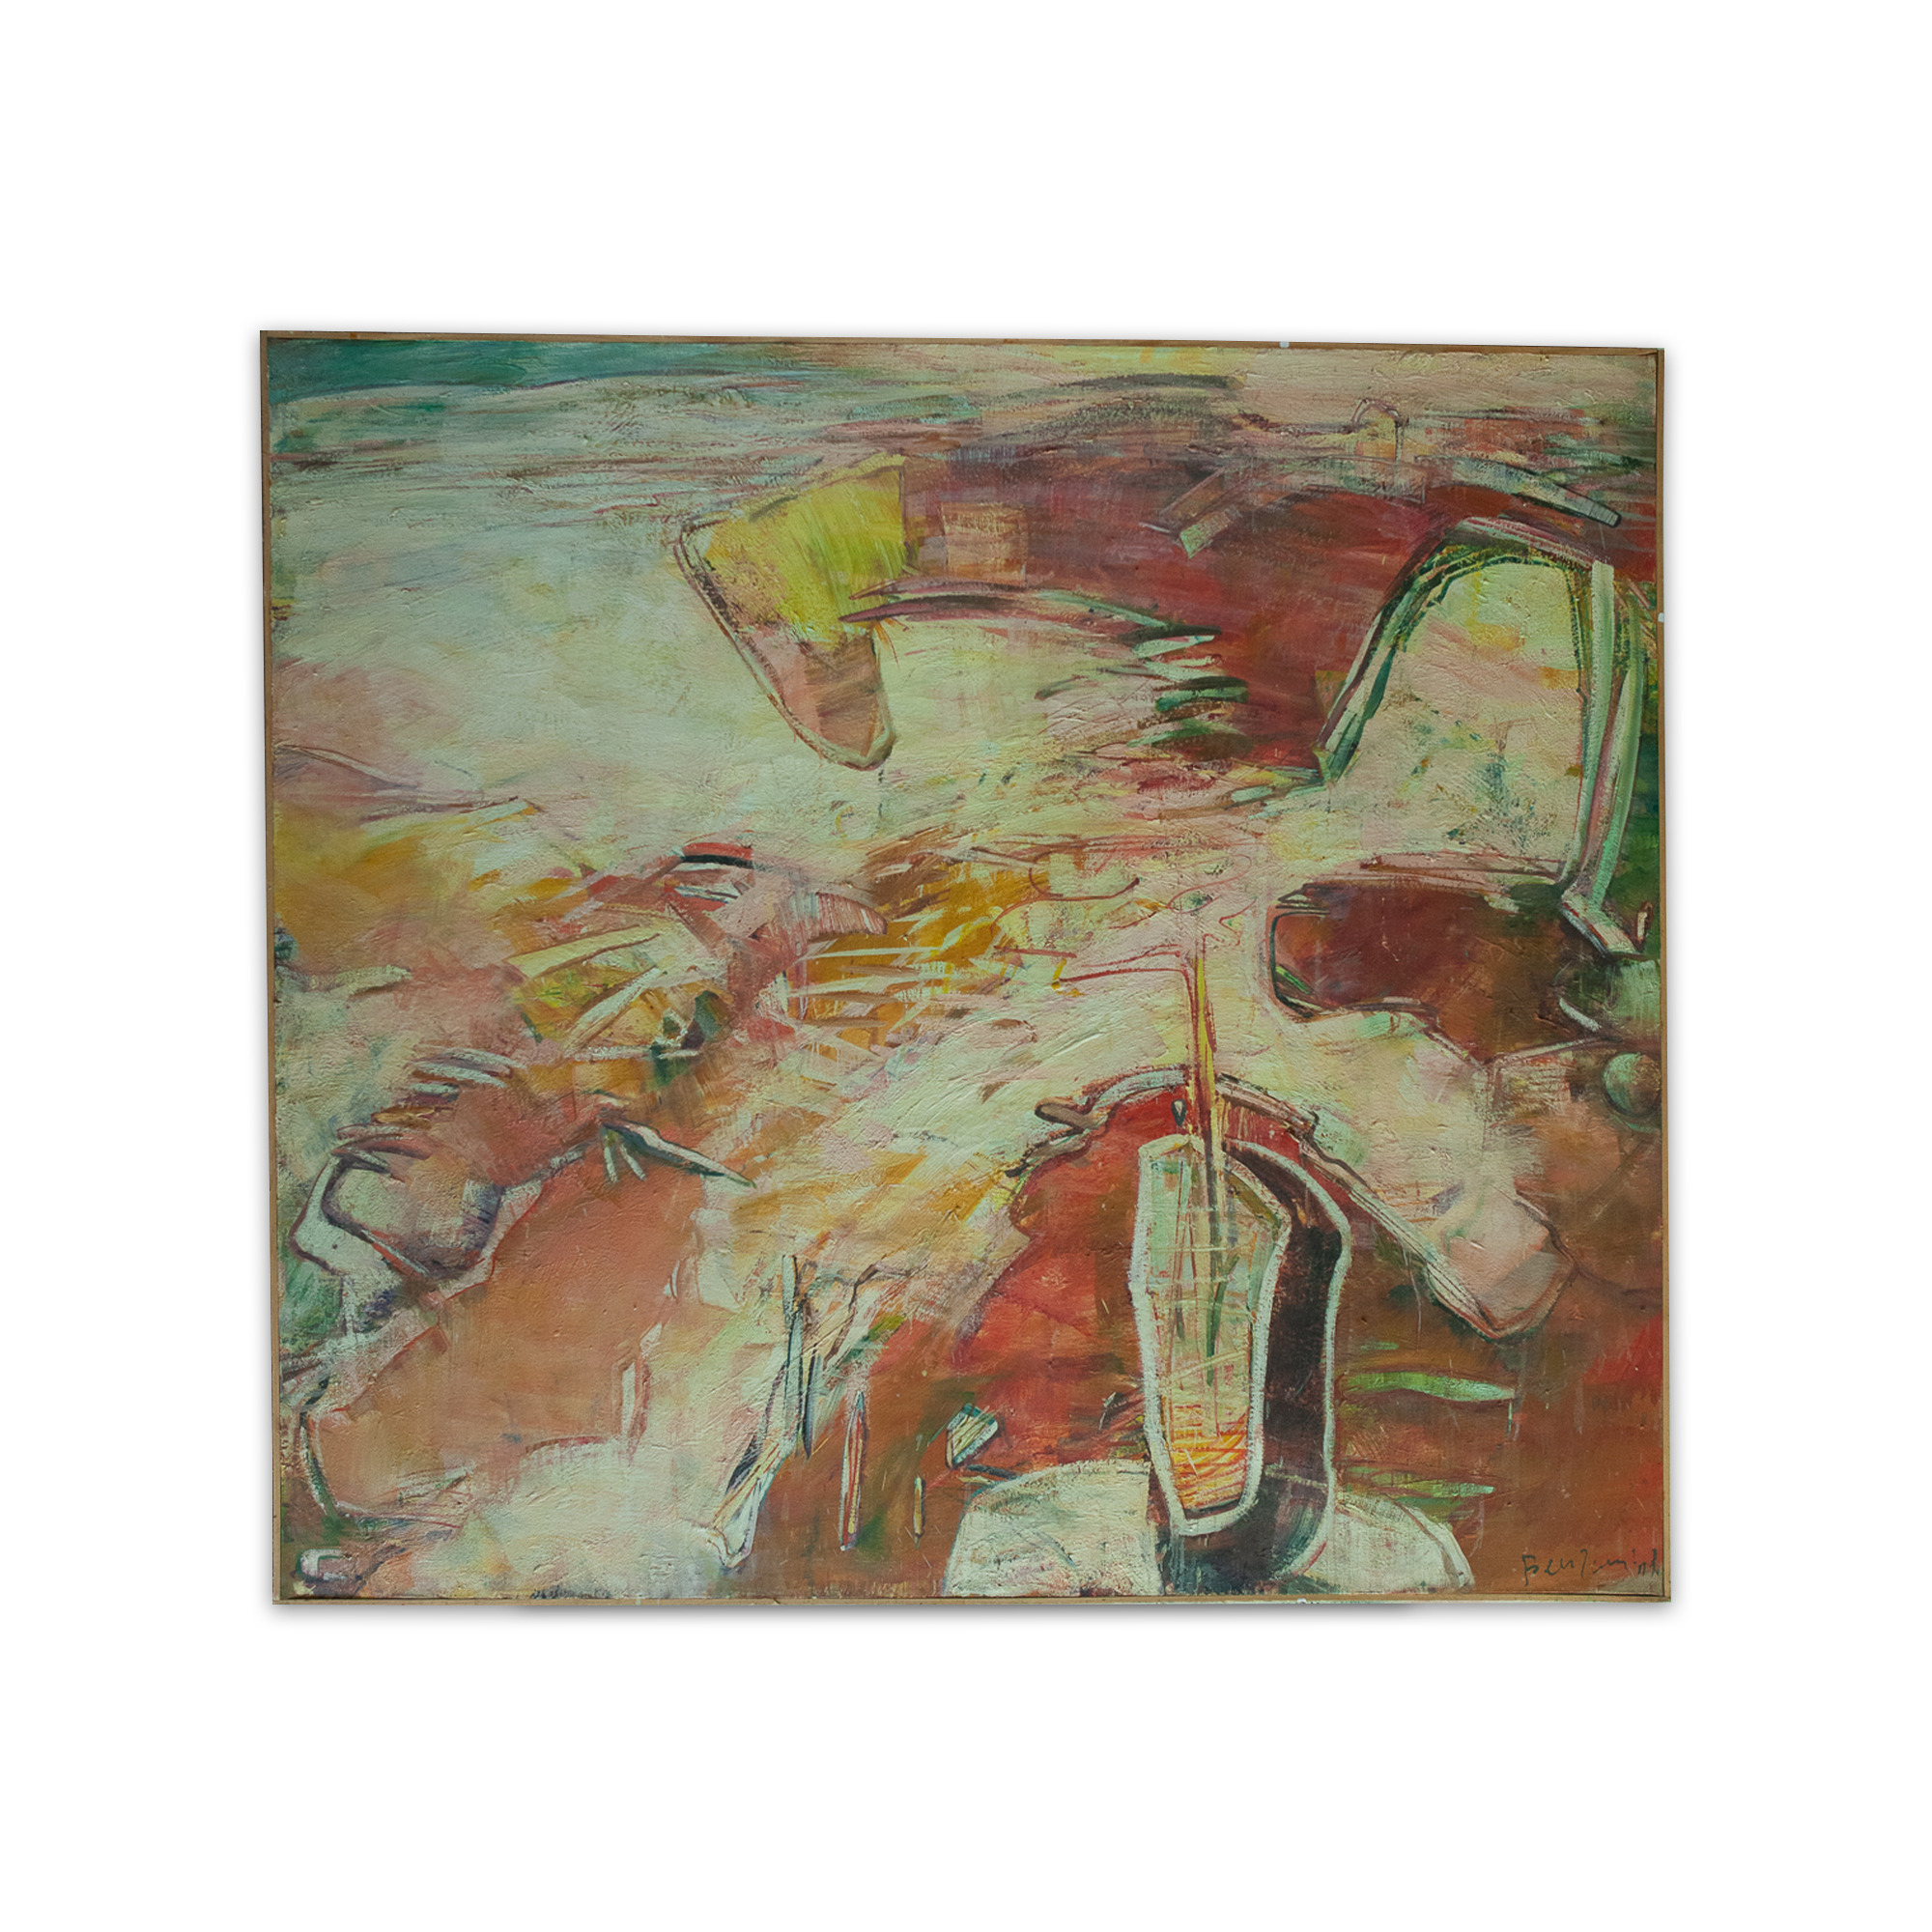 Limonadeglas - oil paint - 1990 - 1.80 x 2.00m